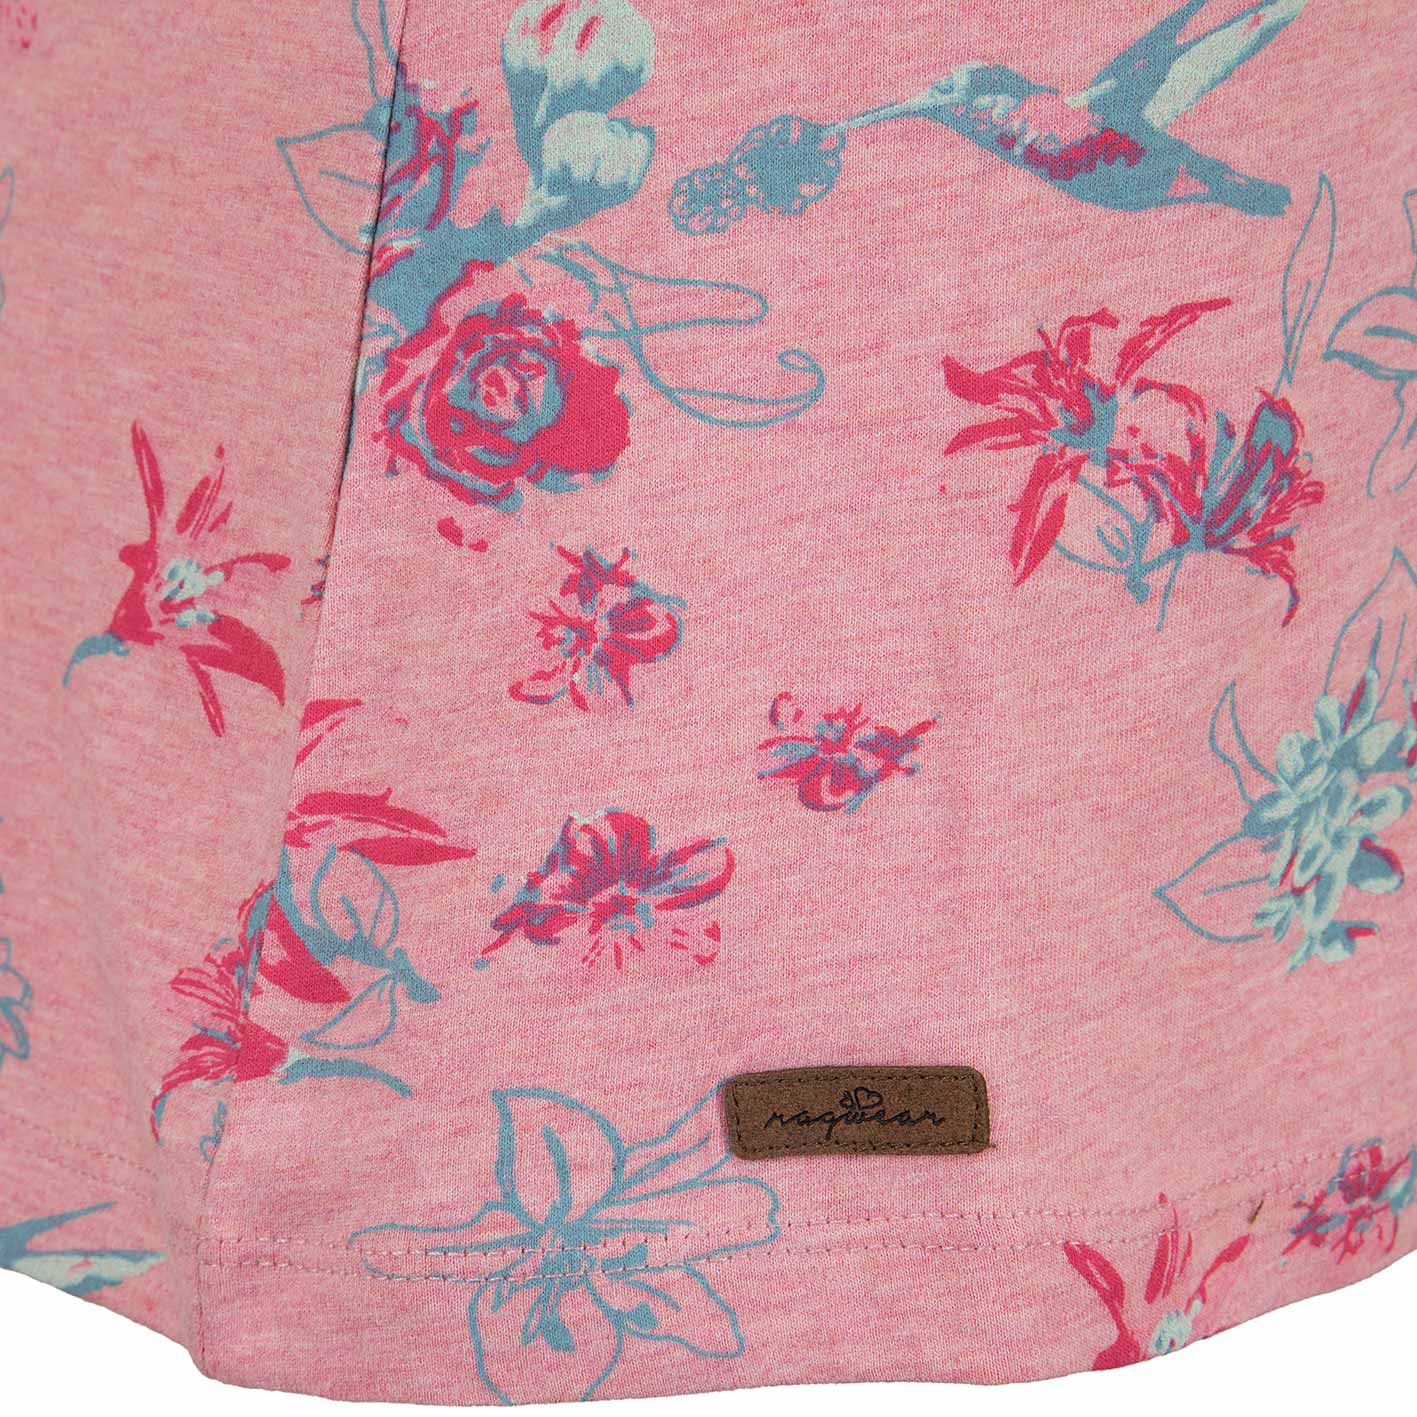 ☆ Ragwear Damen T-Shirt - Flowers Mint bestellen! hier rosa